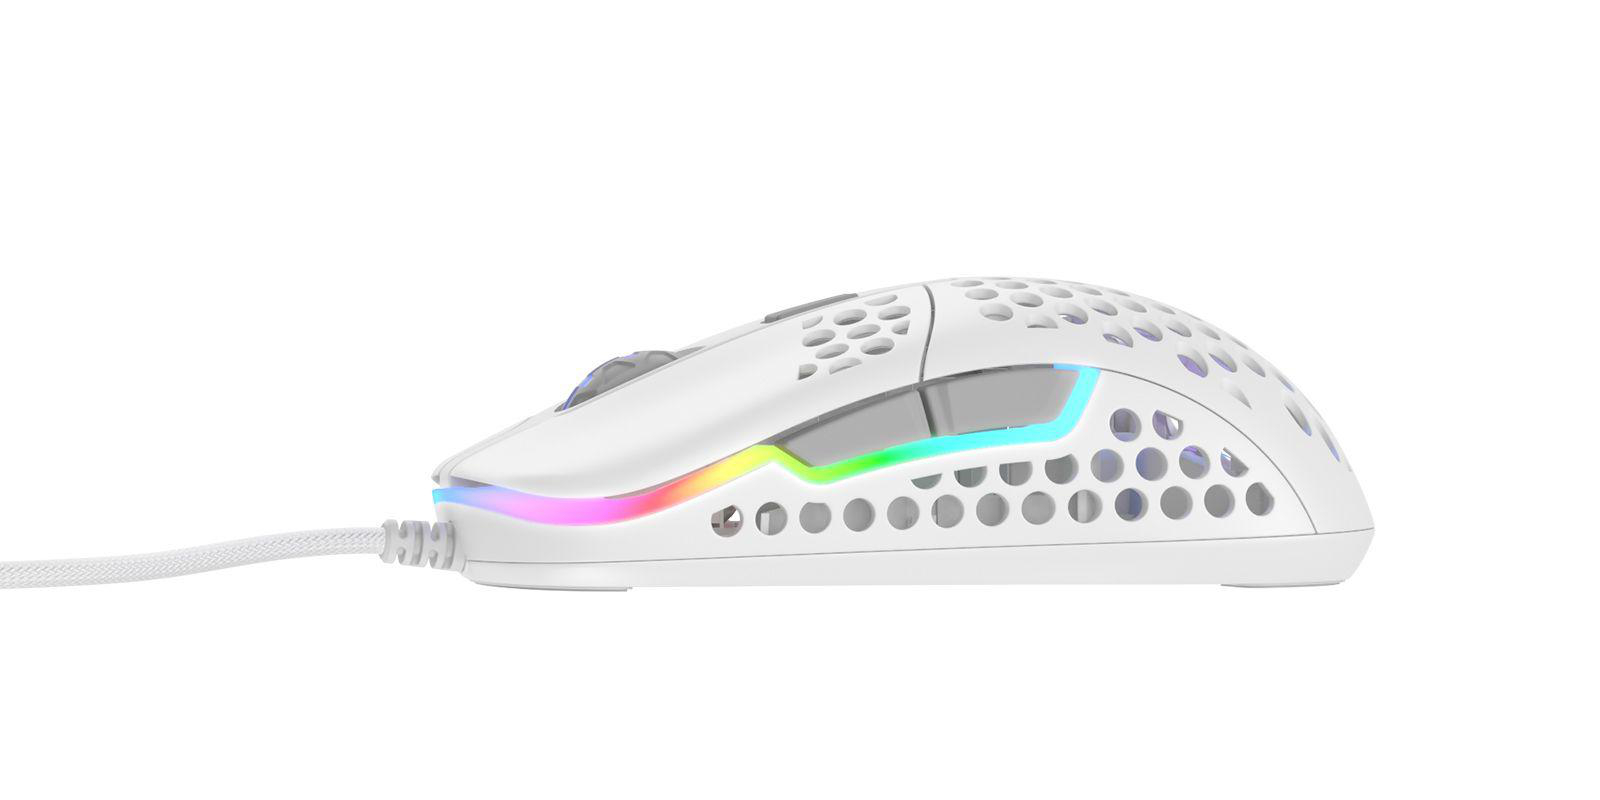 CHERRY XTRFY M42 Maus, Gaming RGB Weiß